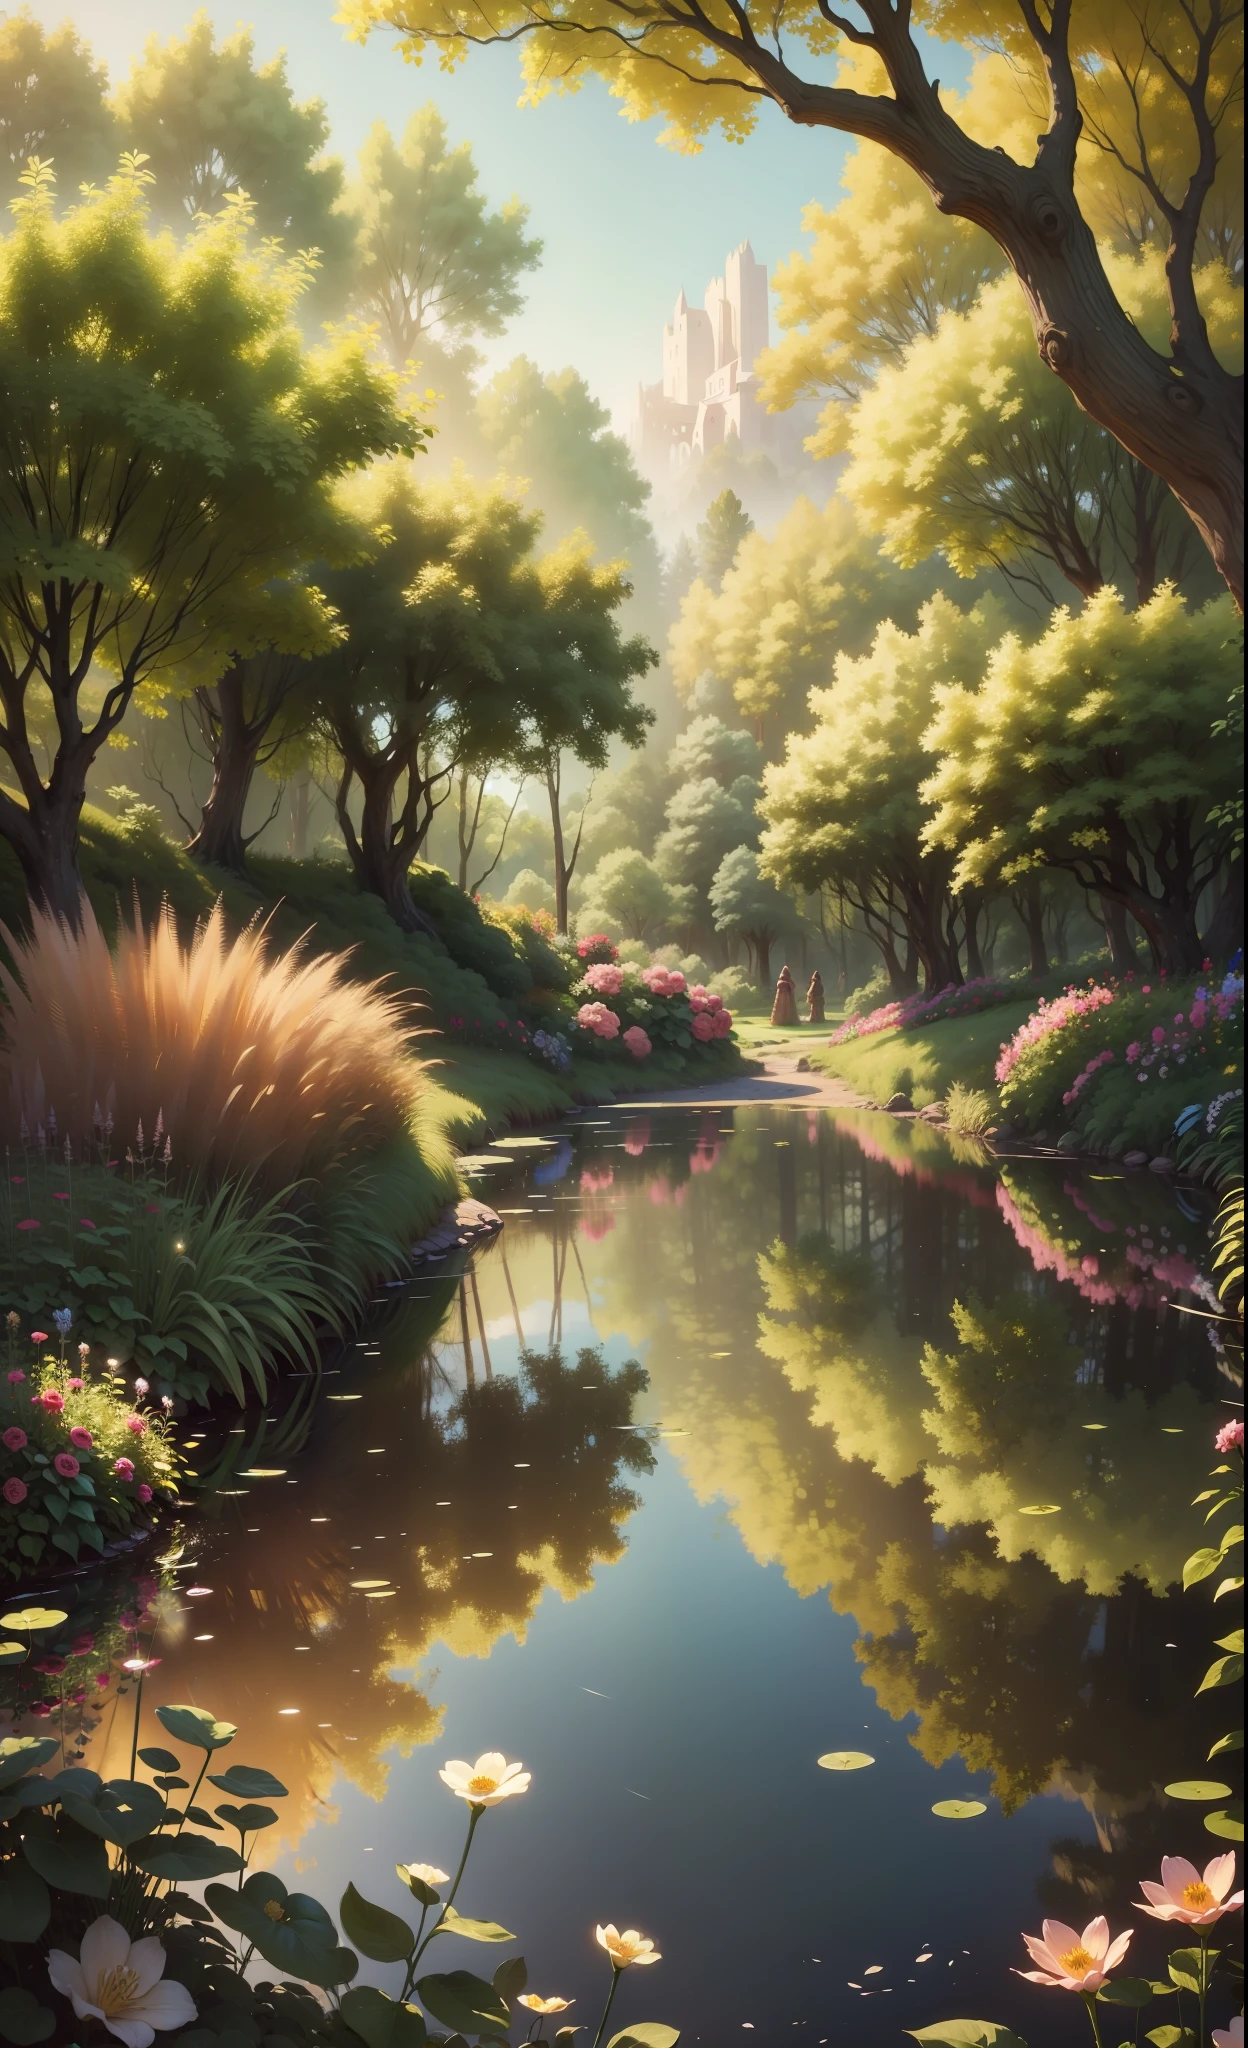 Eden's garden in heaven, beautiful landscape, magestic, ethereal, golden, trees, lake, bushes, flowers